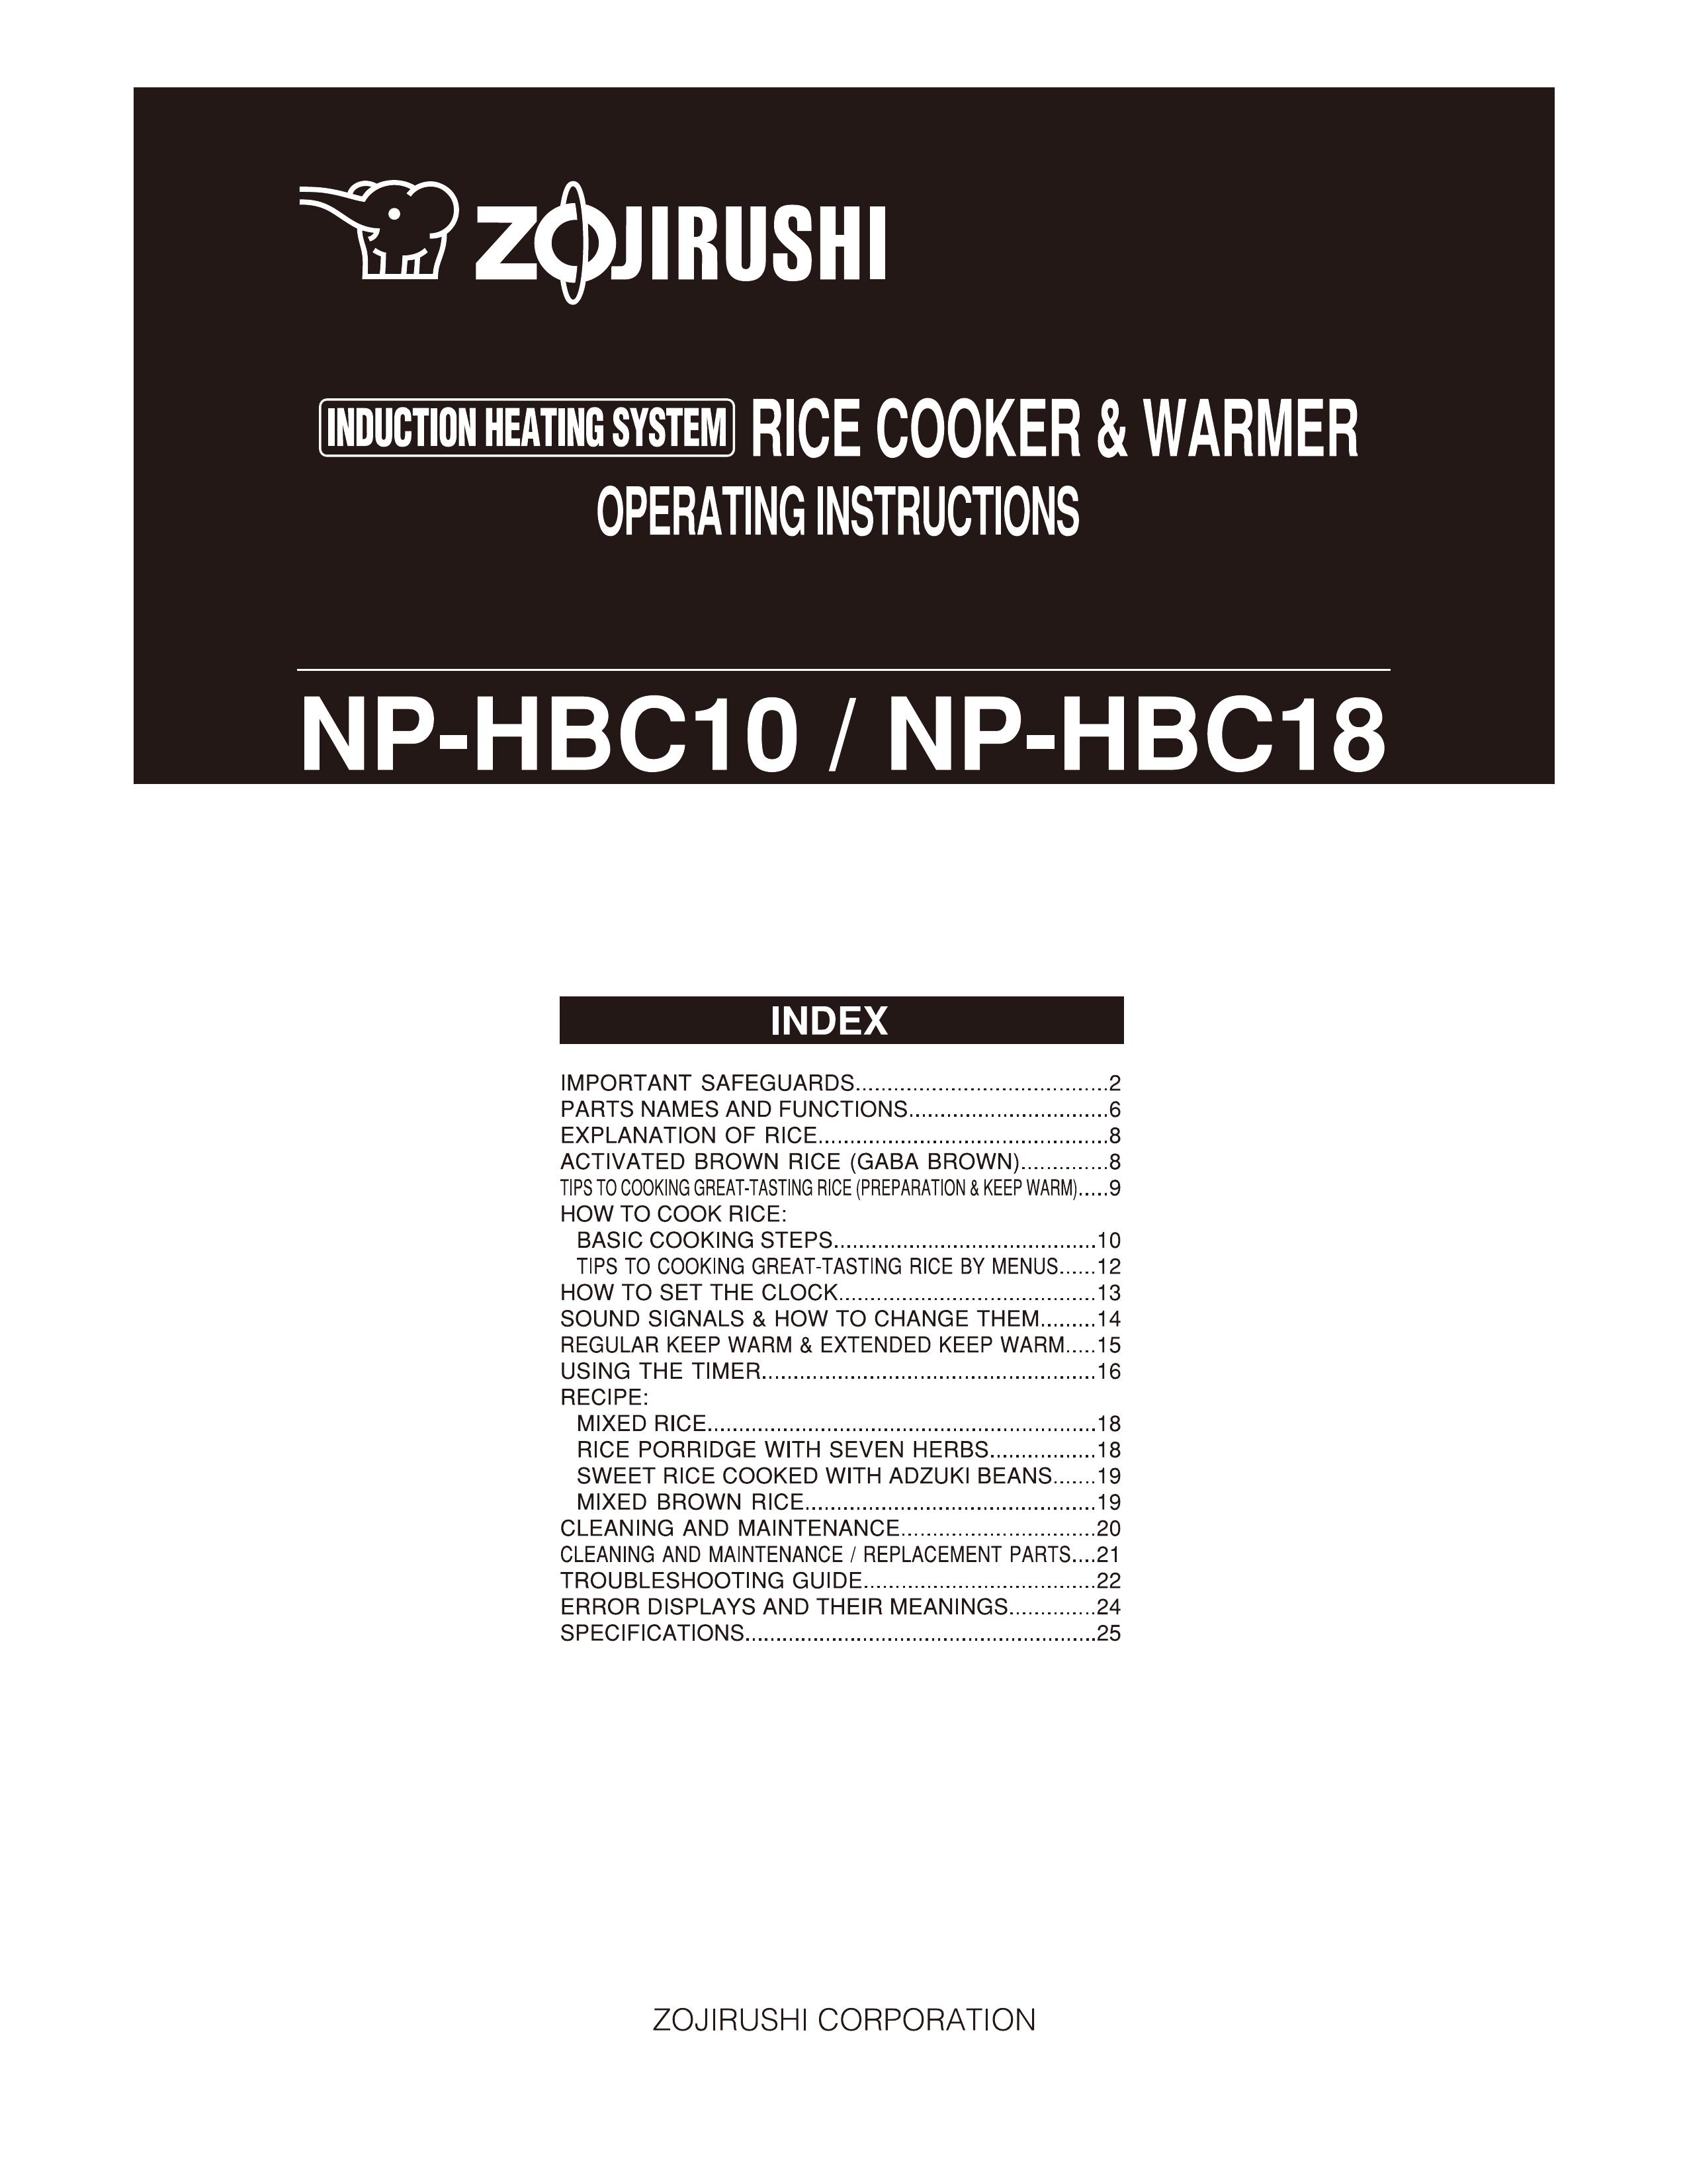 Zojirushi NP-HBC18 Rice Cooker User Manual